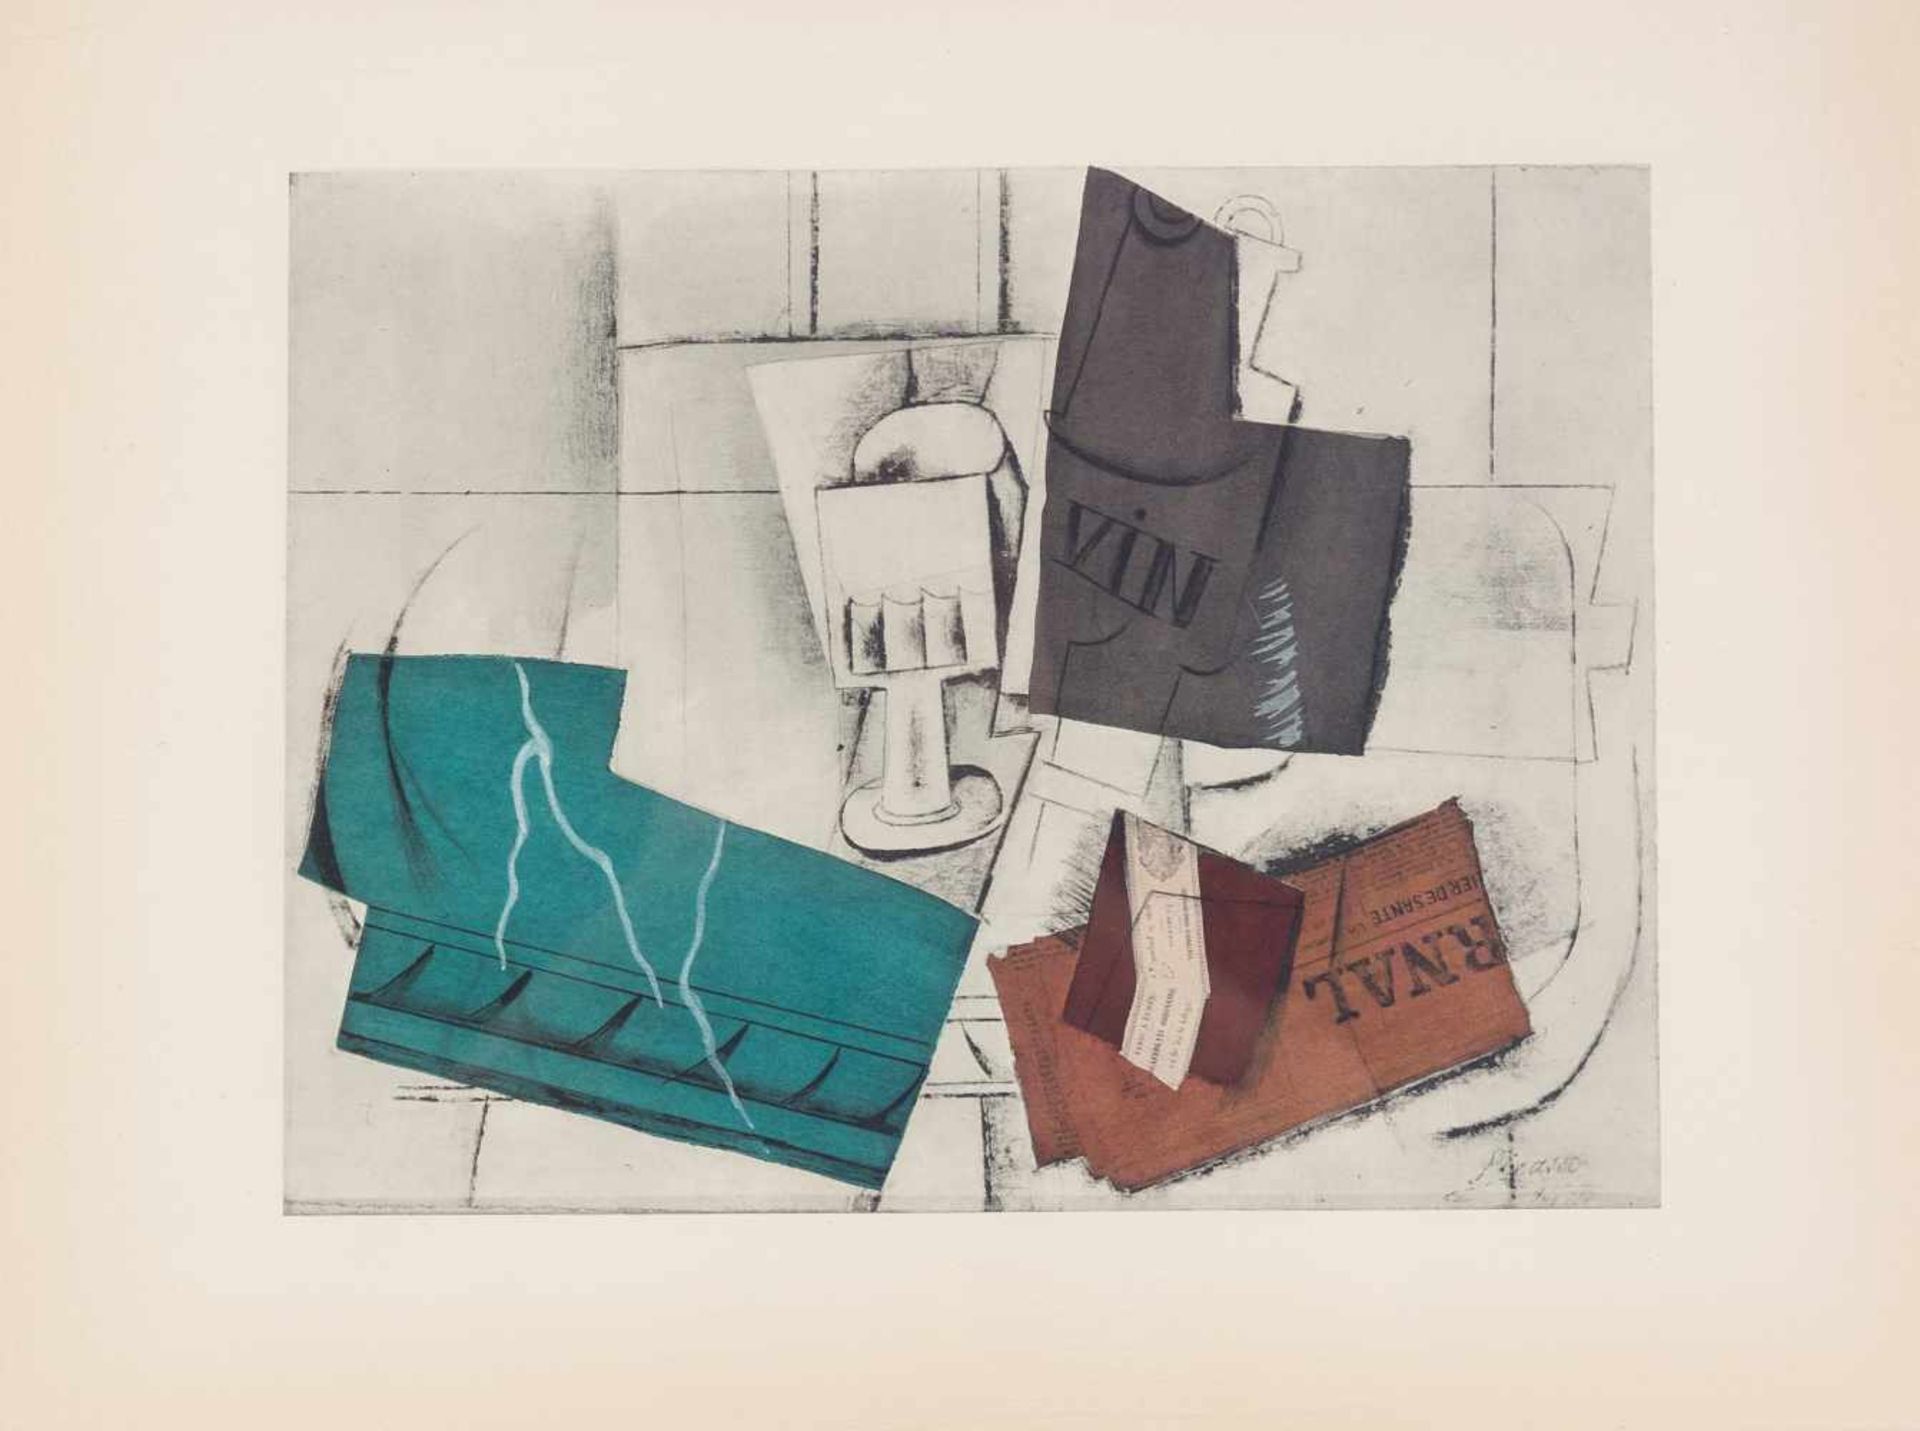 Pablo Ruiz Picasso (Malaga, 1881 - Mougins, 1973) "Le Journal. Tavola V" One of the original